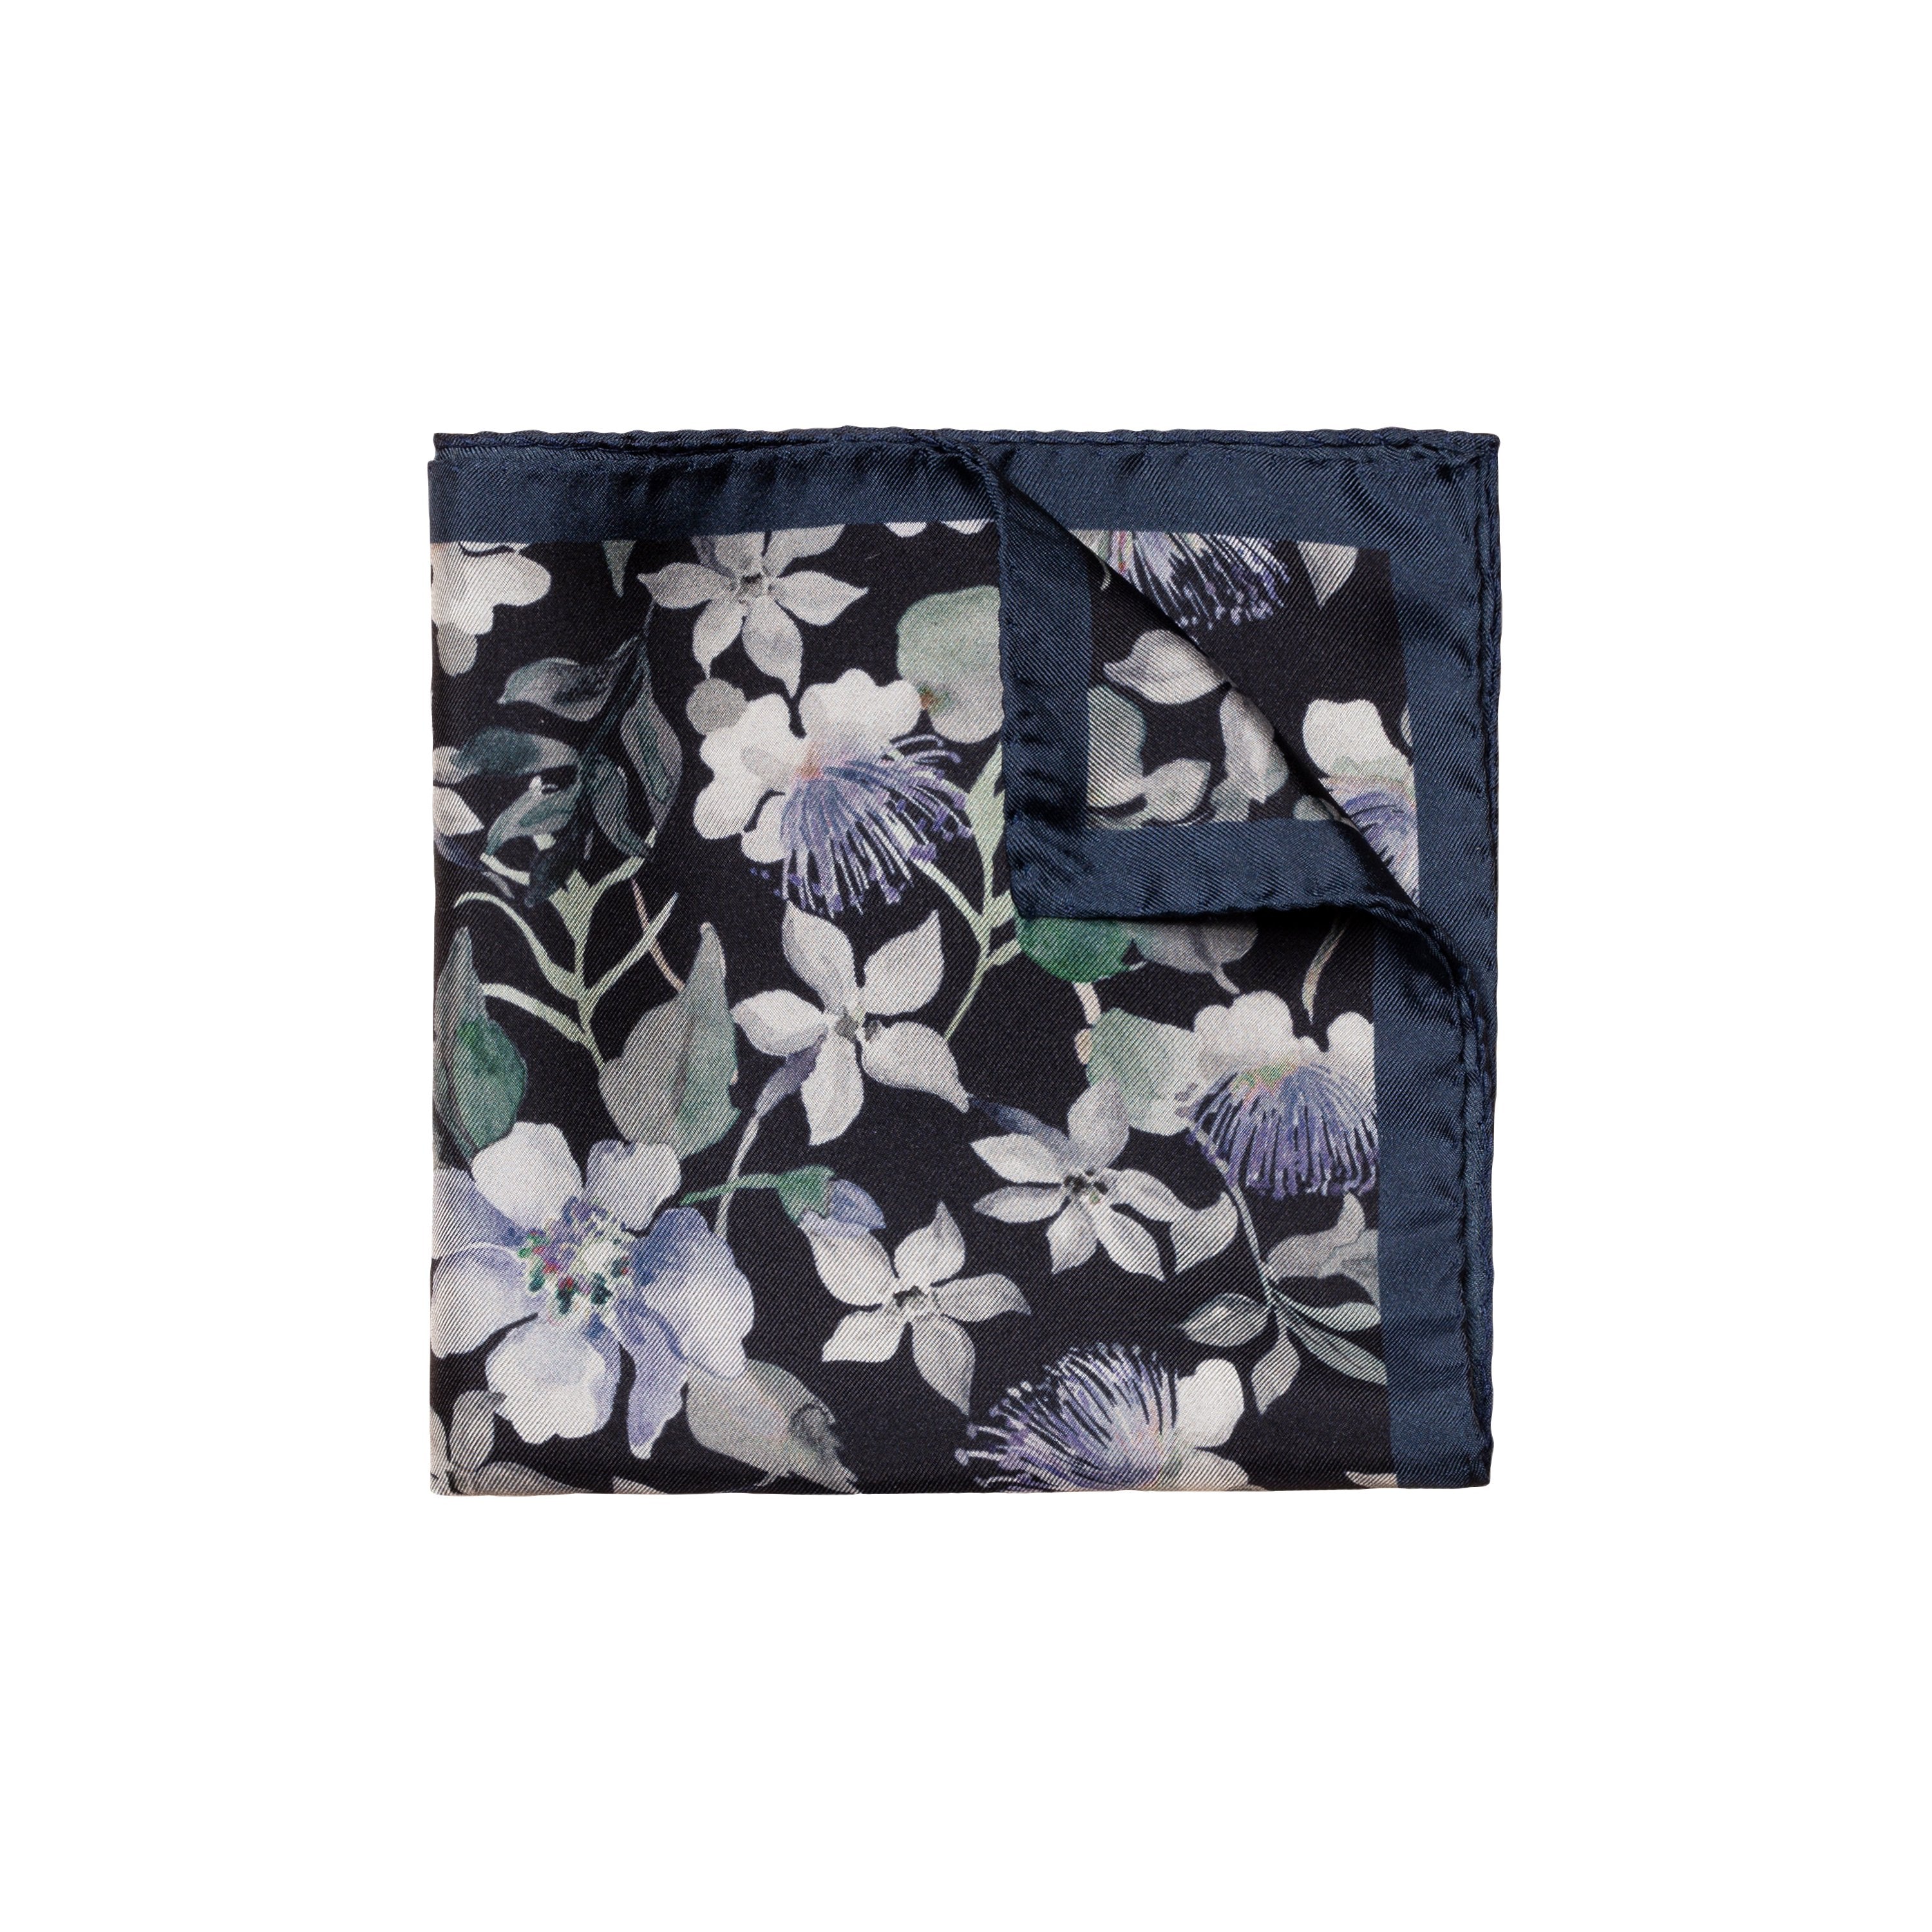 ETON - Navy Blue Floral Silk Pocket Square A0003365429